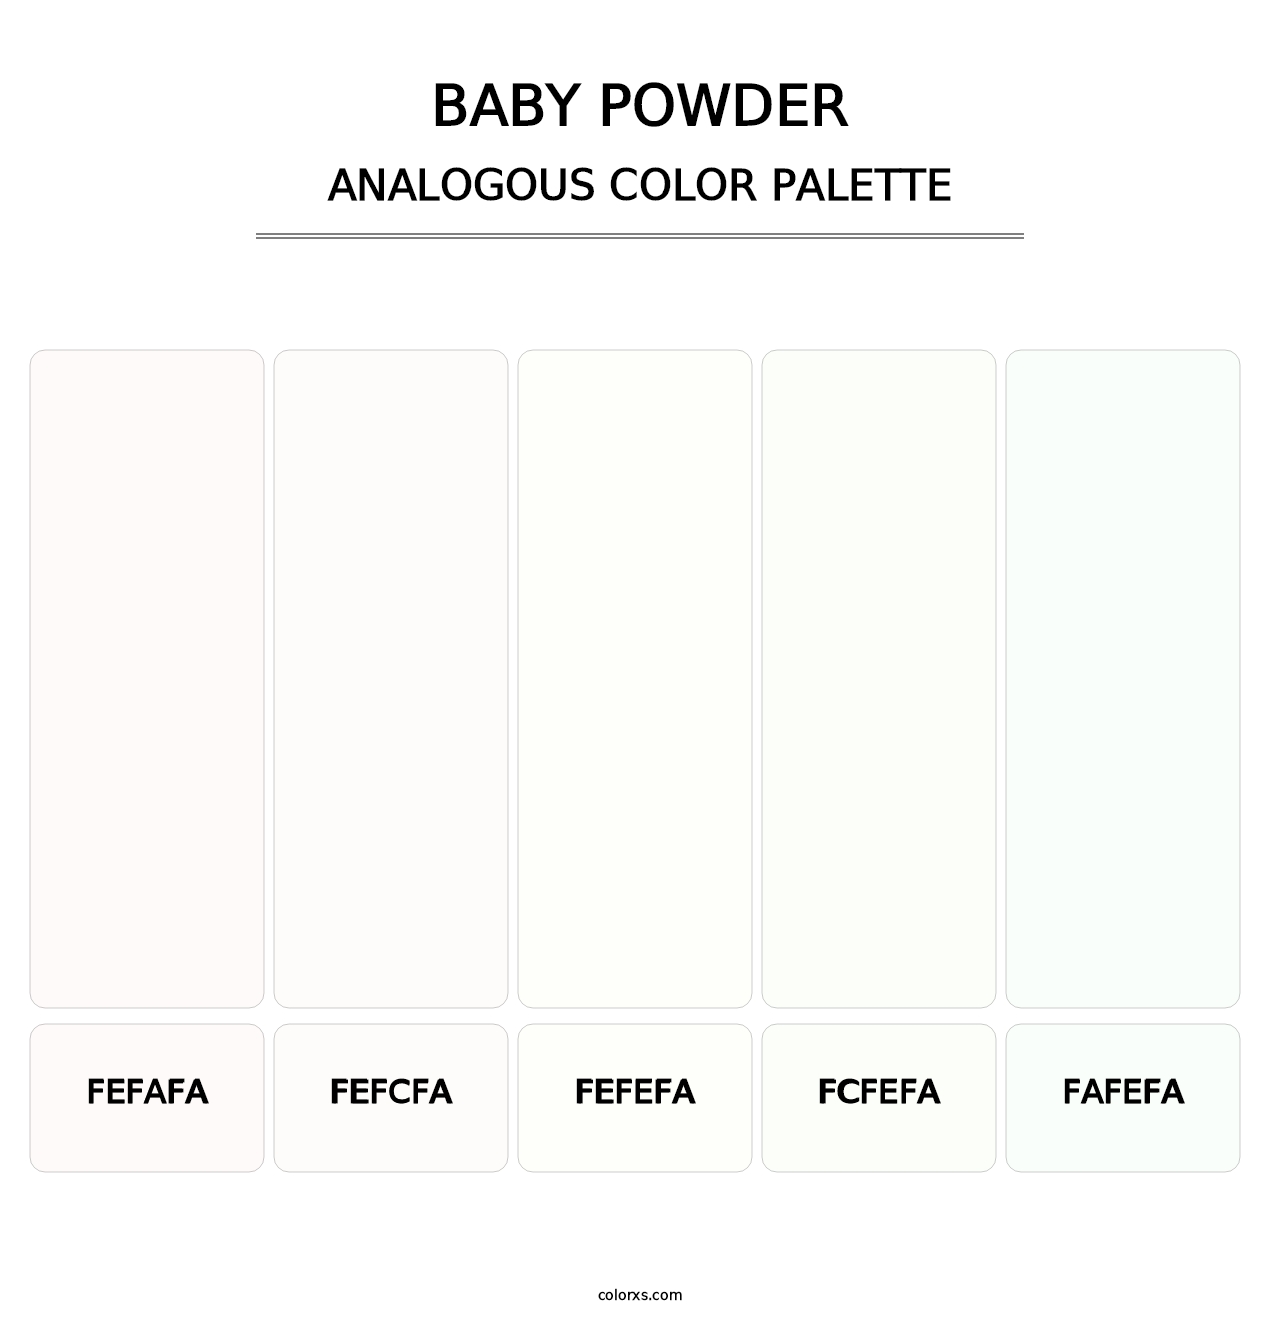 Baby Powder - Analogous Color Palette